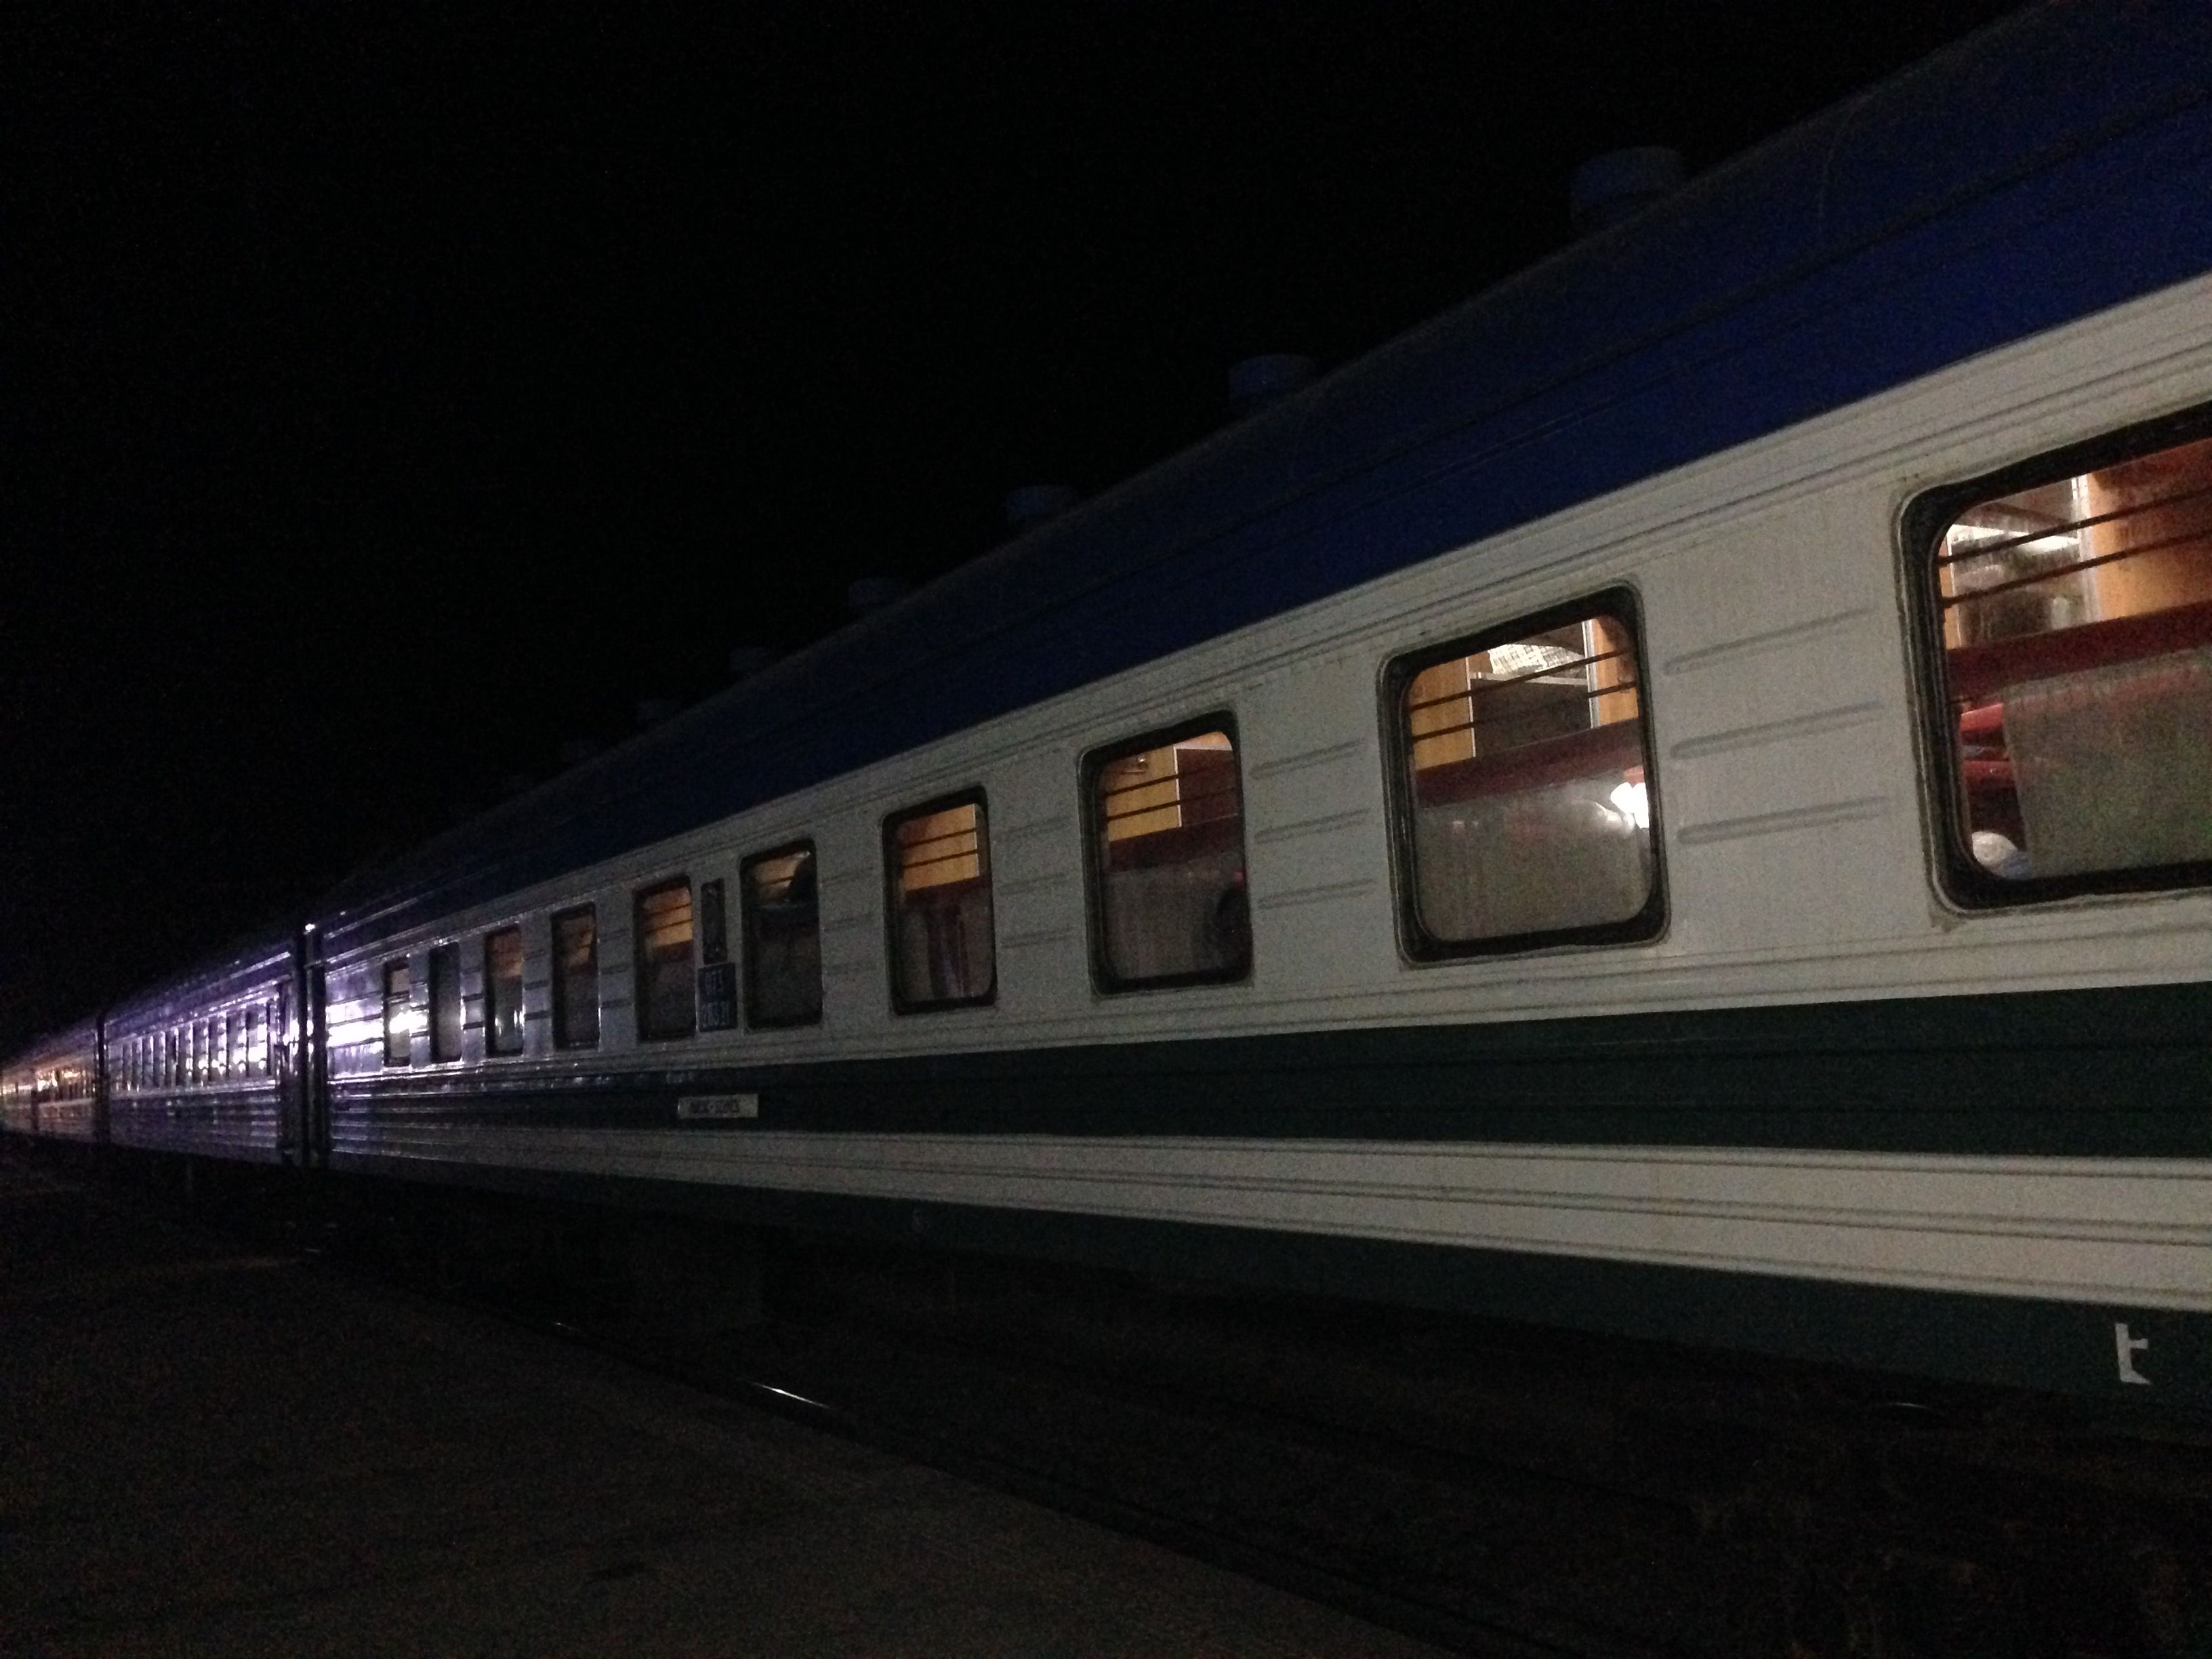 Train from Nukus, Uzbekistan to Kazakhstan